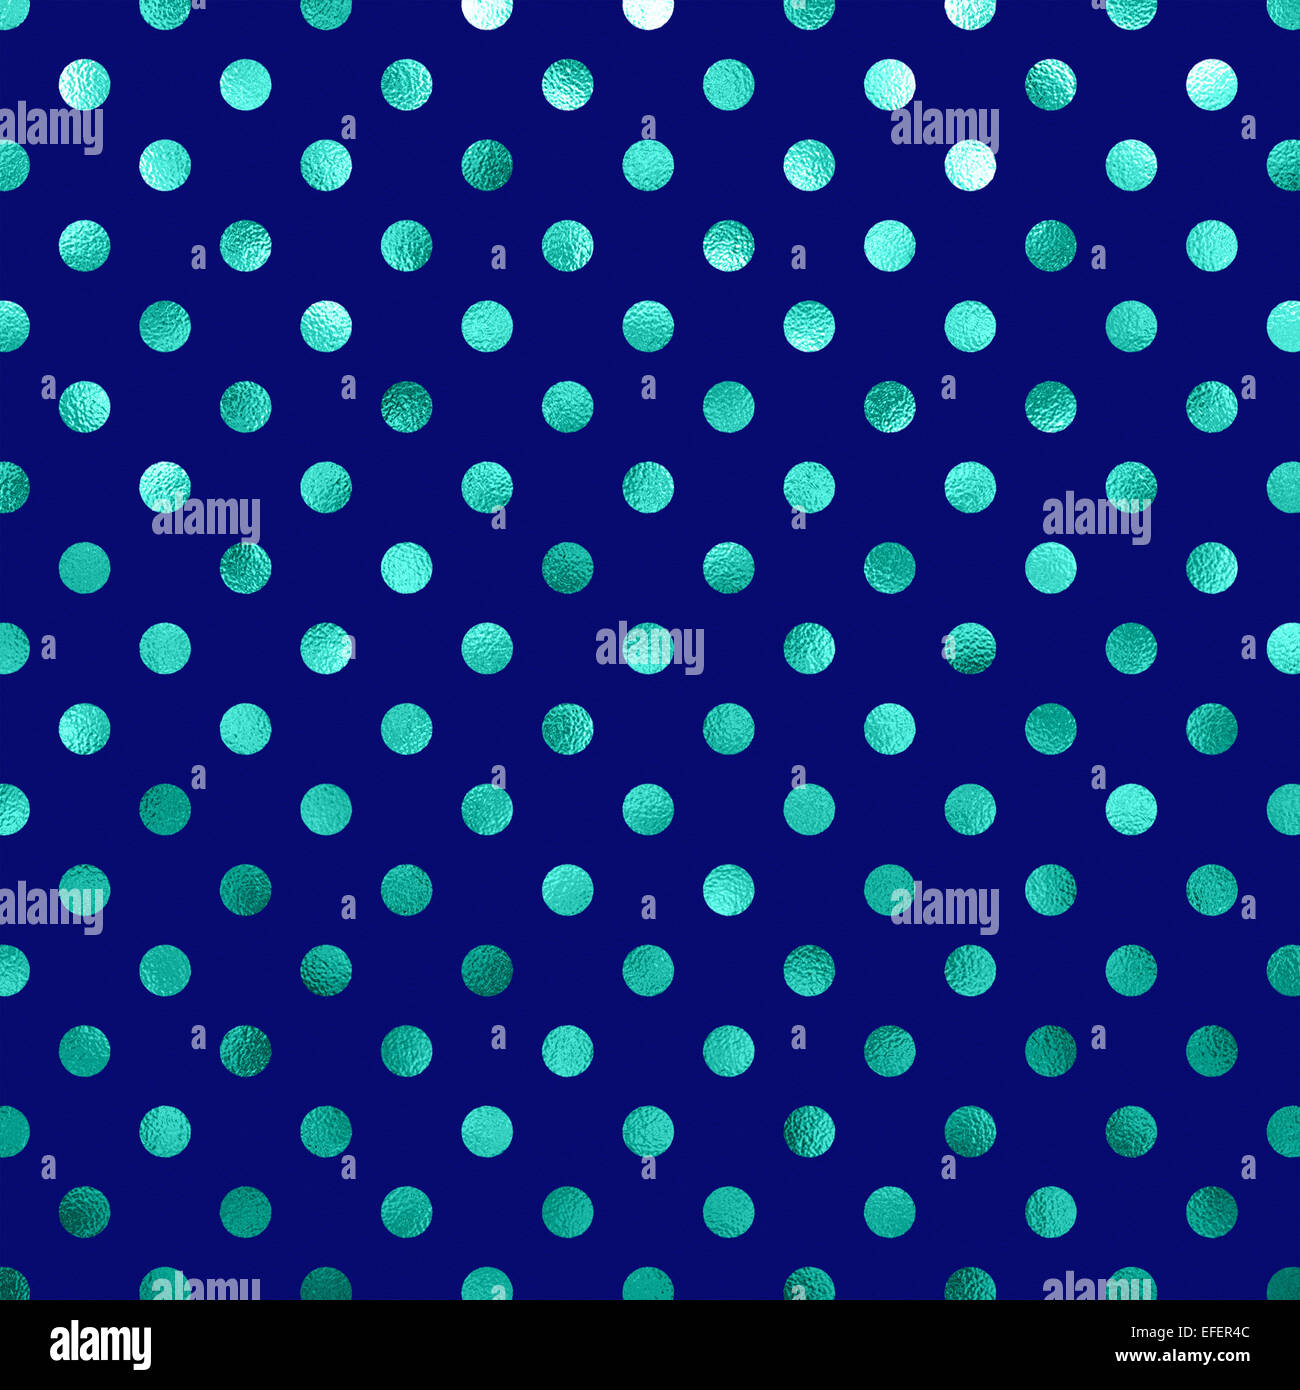 Aqua Blau Grün Metallic Folie Polka Dot Muster Swiss Dots Textur Papier Farbe Hintergrund Stockfoto